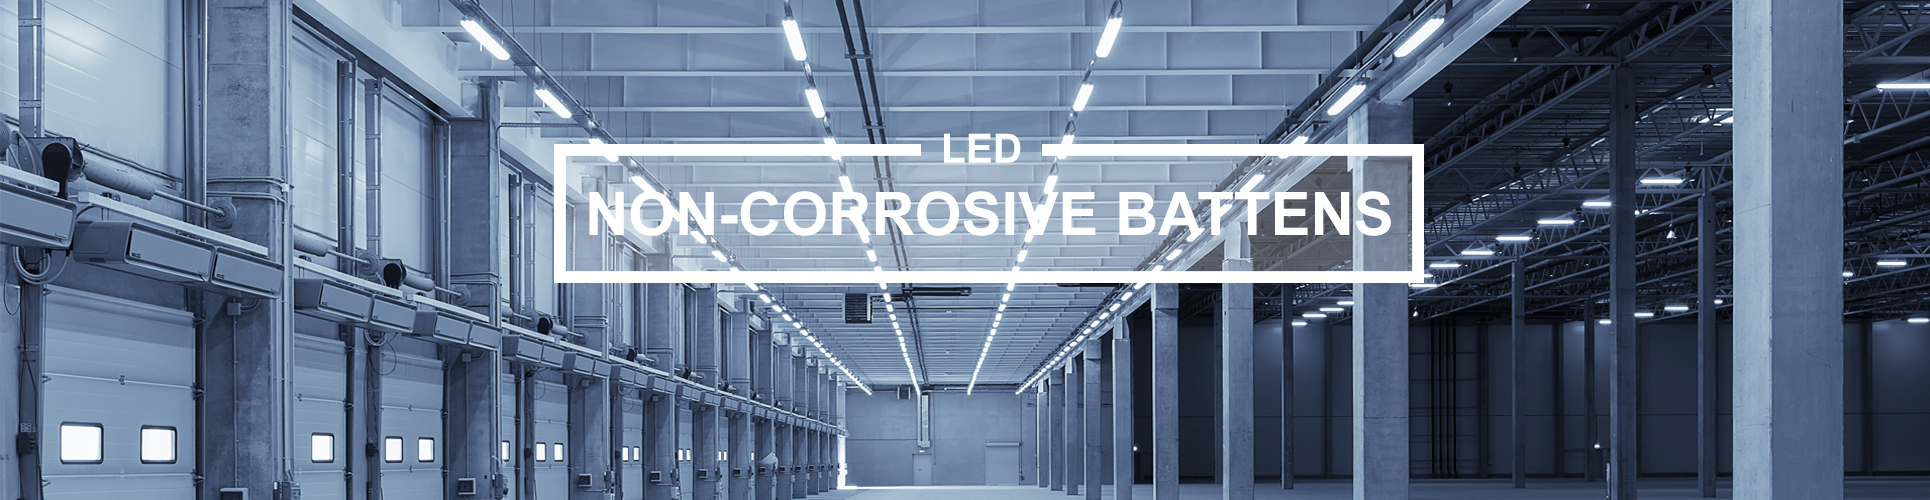 Non-corrosive batten lights